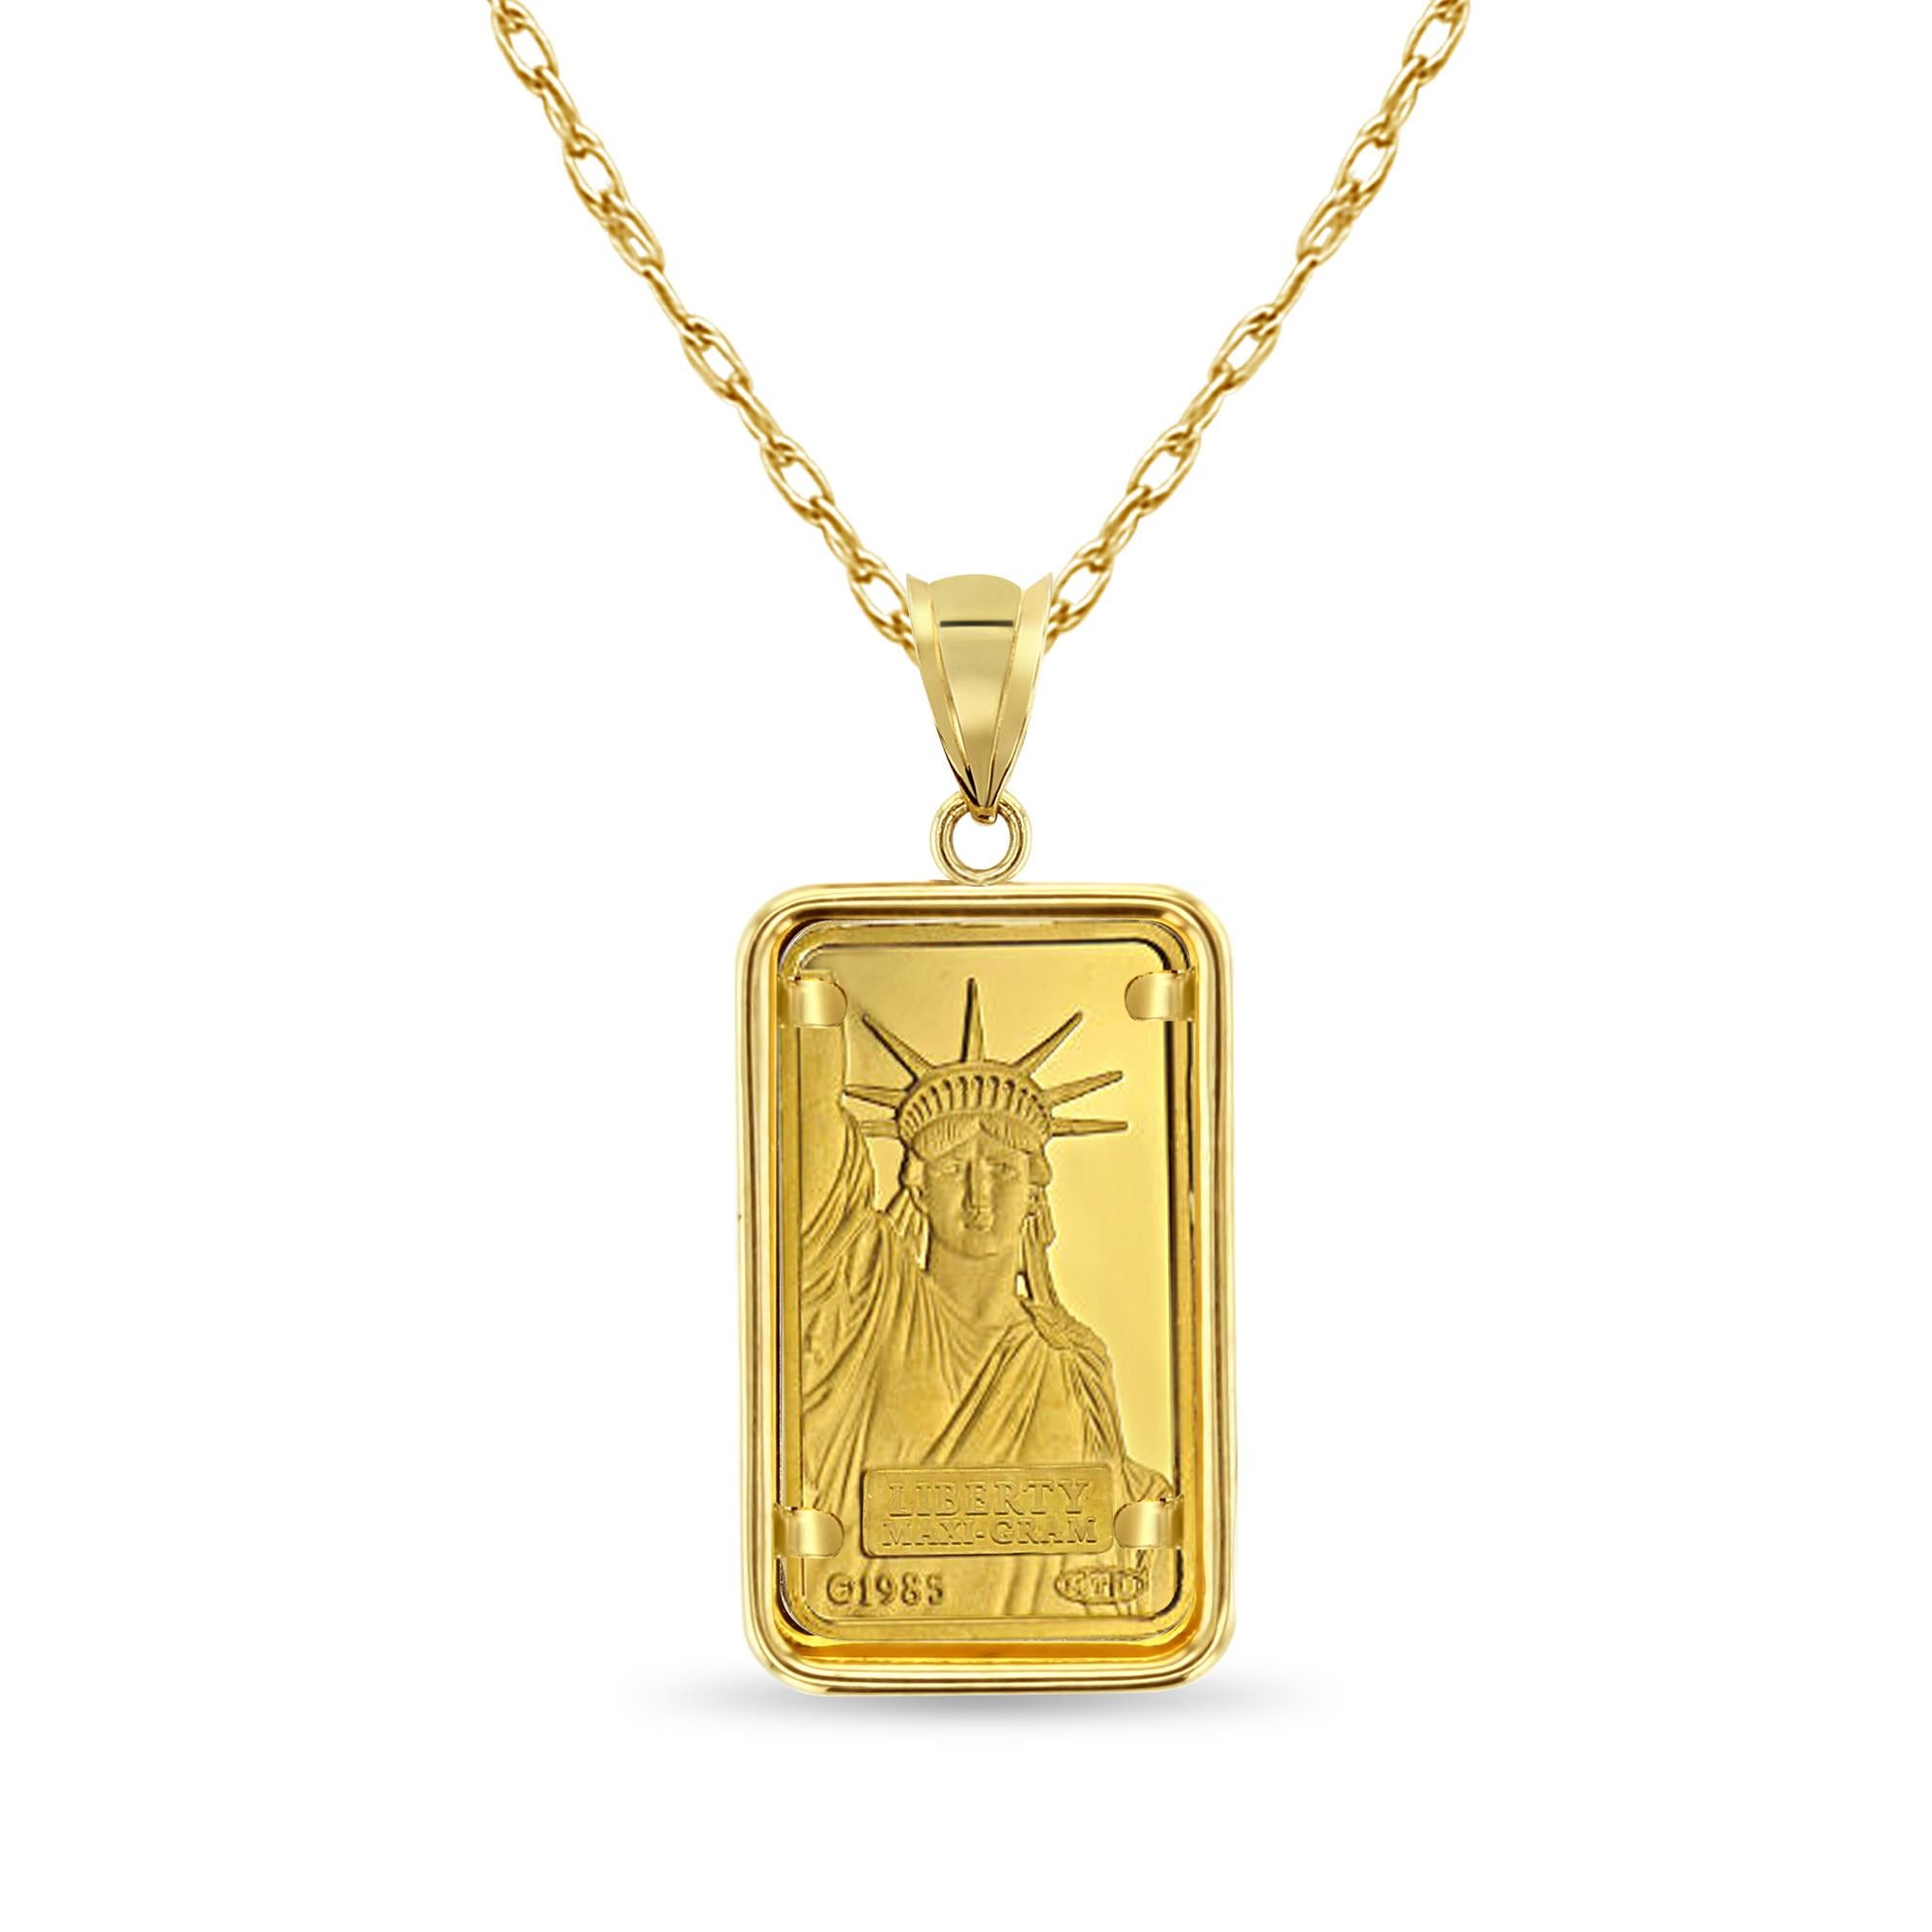 5 gram gold bar pendant